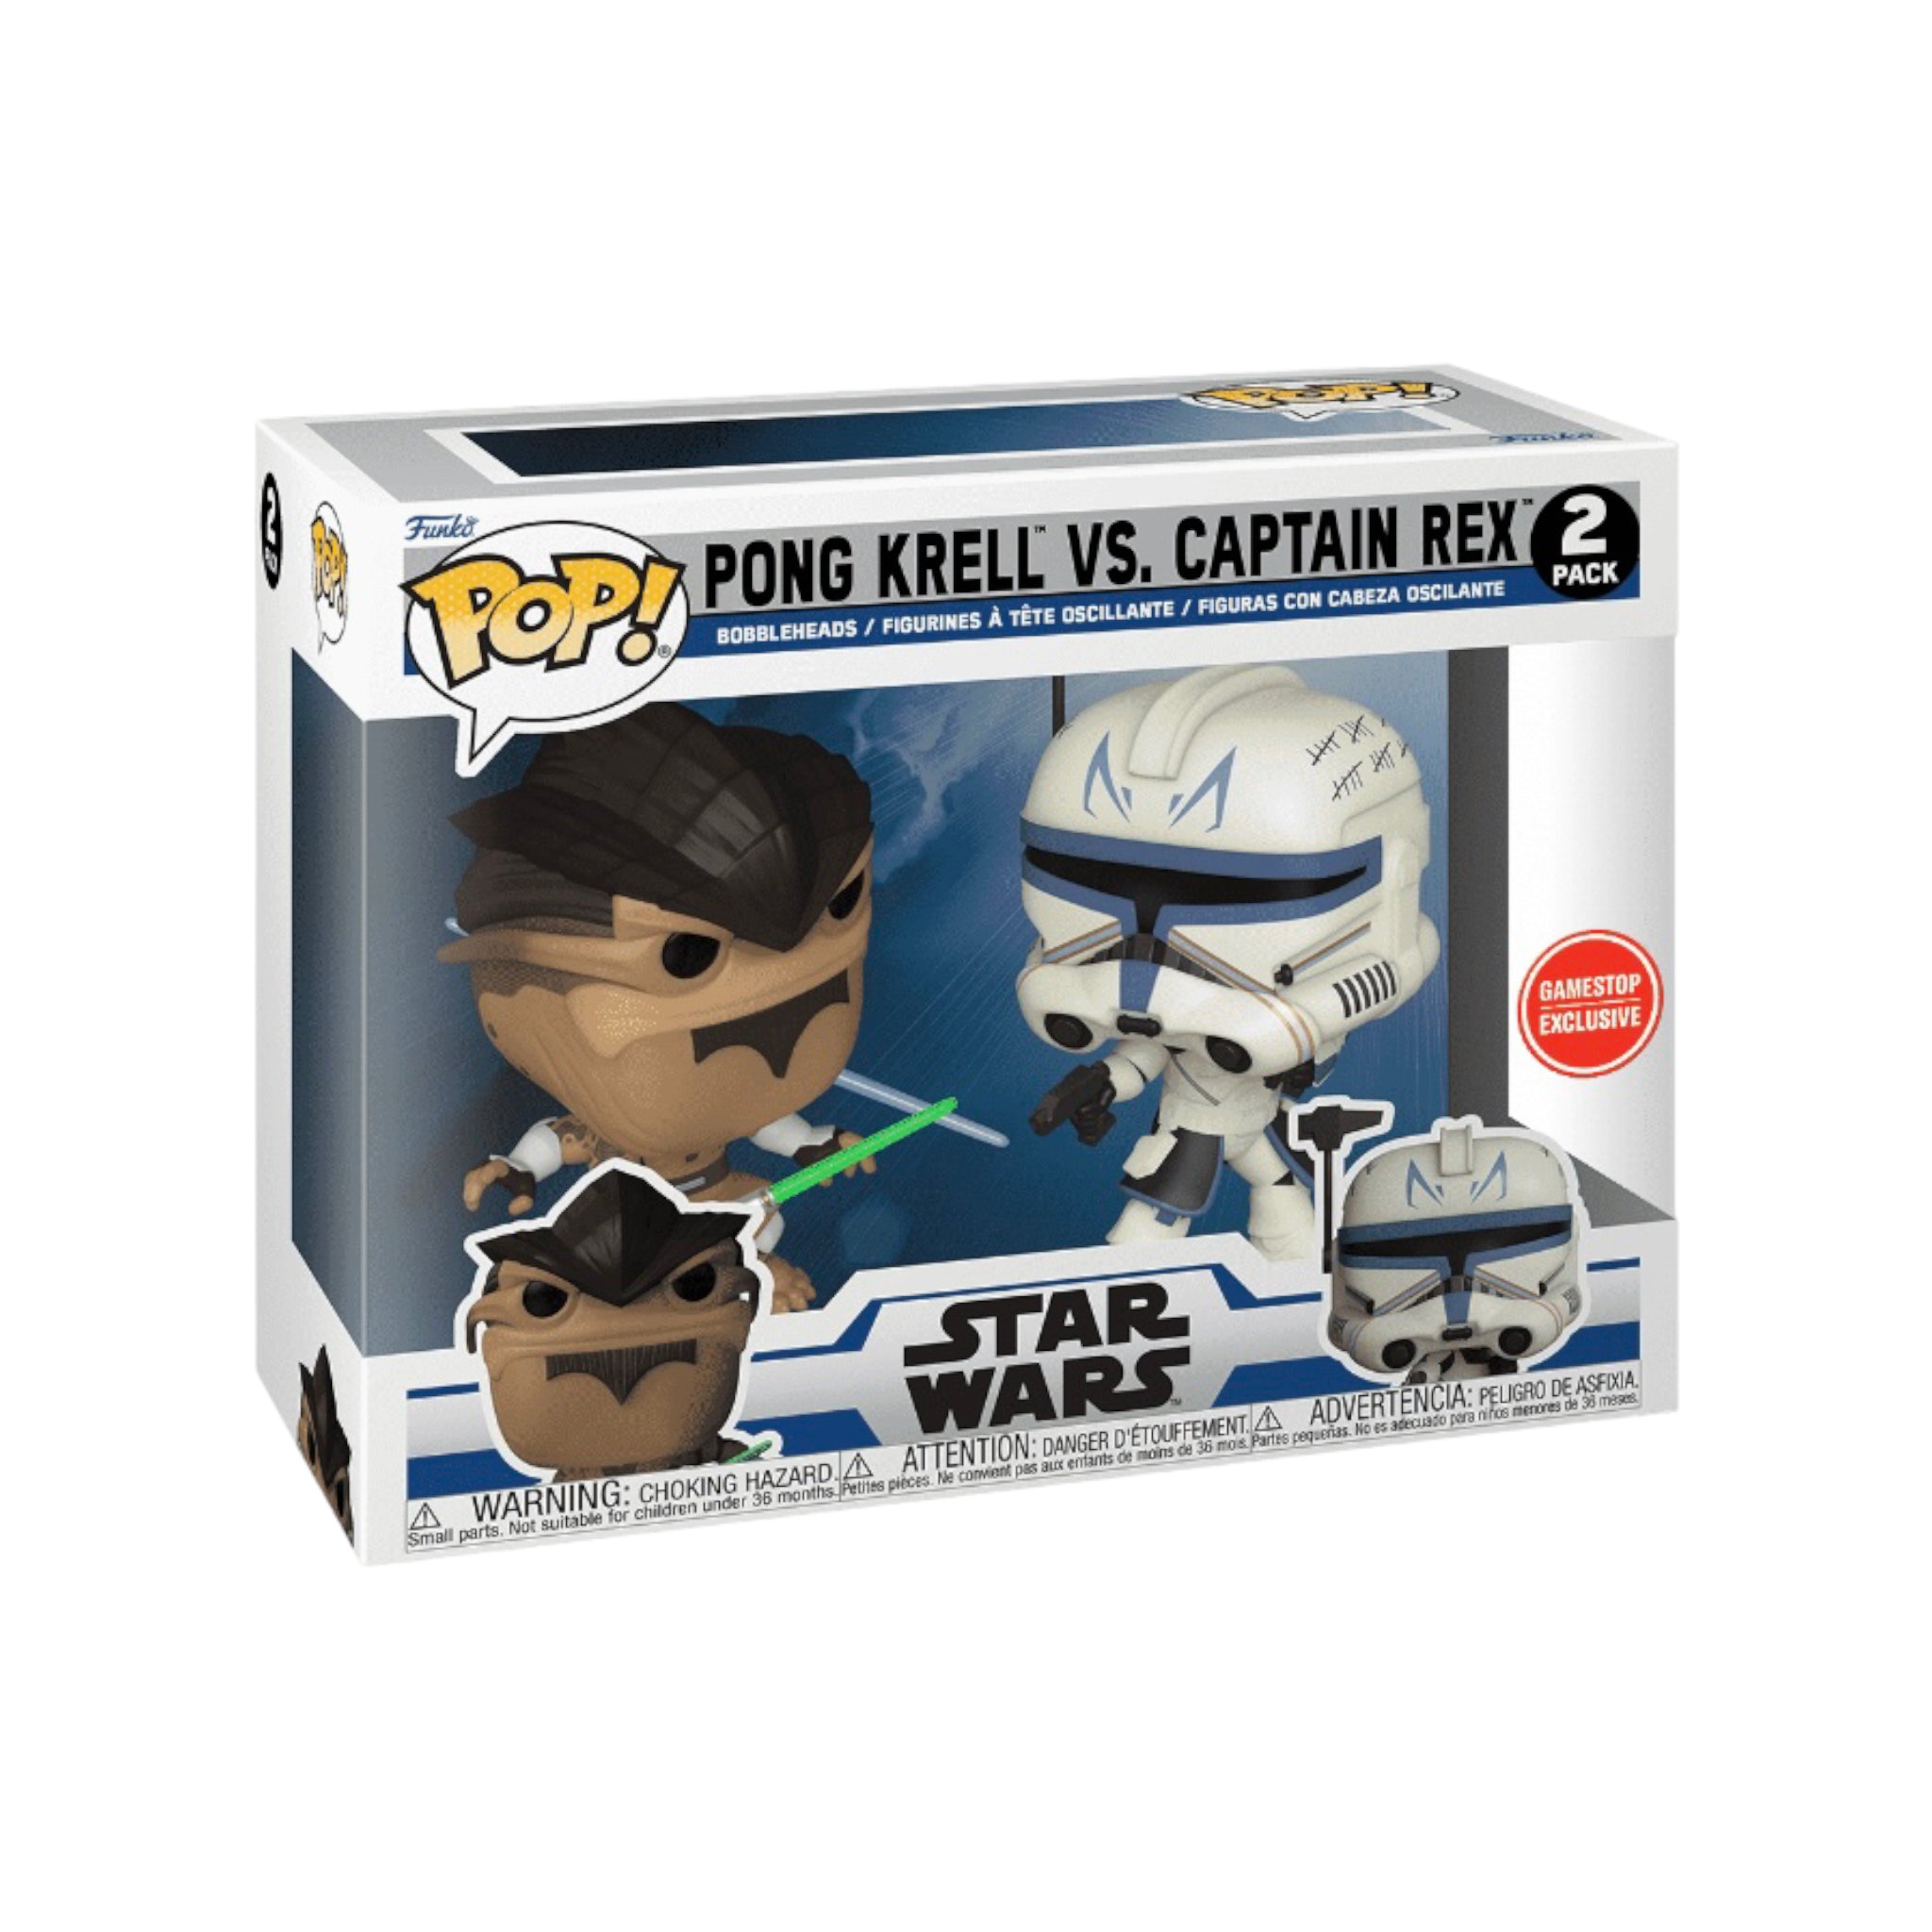 Pong Krell Vs. Captain Rex 2 Pack Funko Pop! - Star Wars: The Clone Wars - GameStop Exclusive